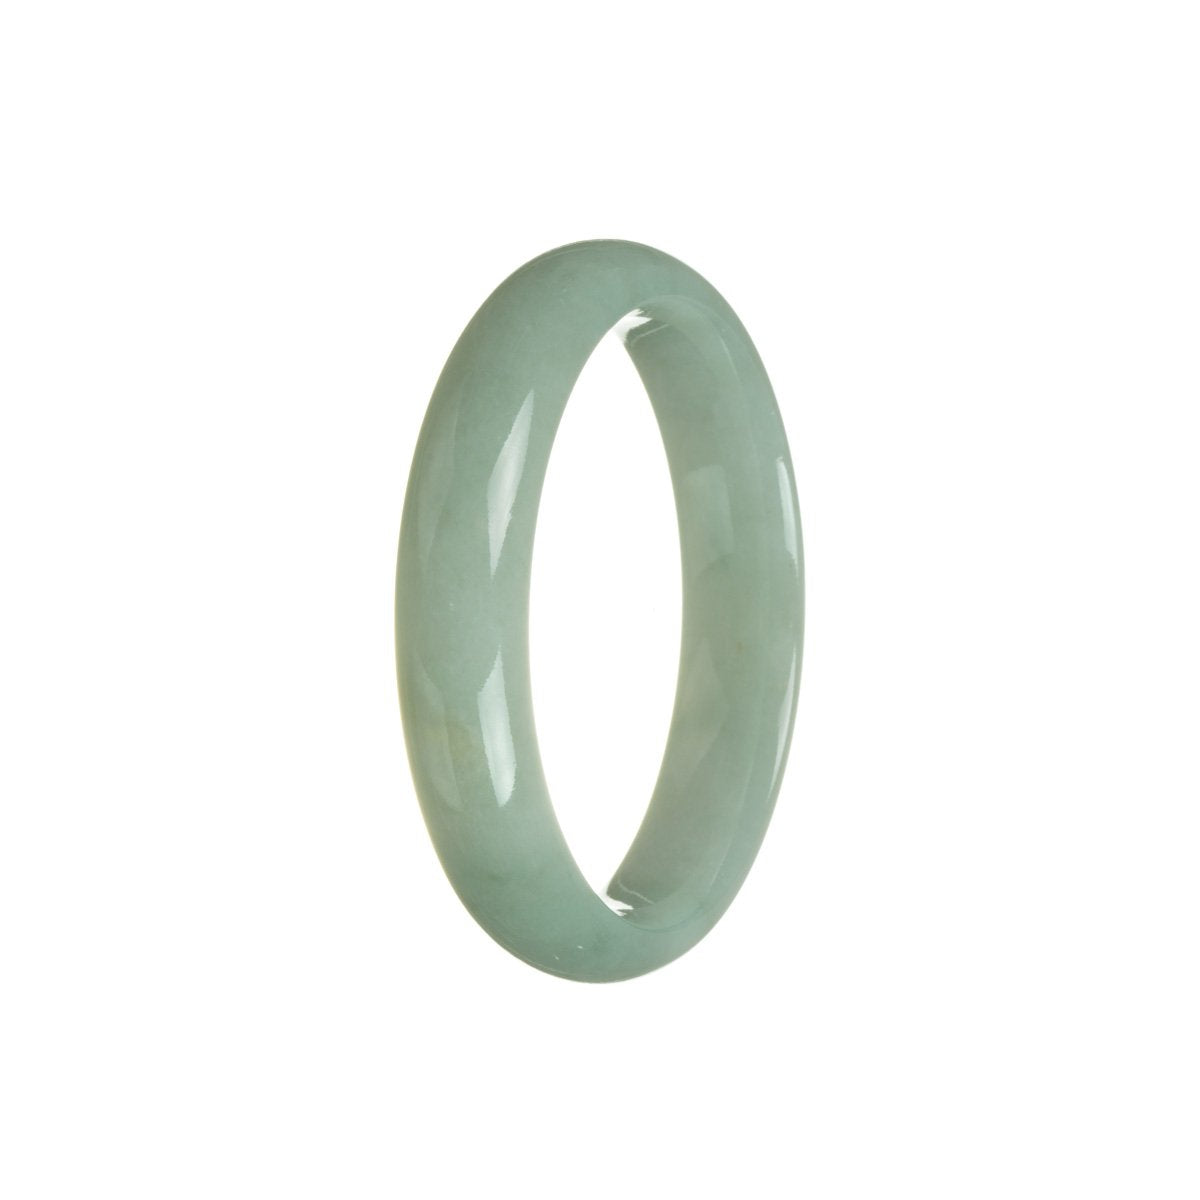 A half-moon shaped green Burma jade bangle bracelet, crafted from genuine Grade A jade.